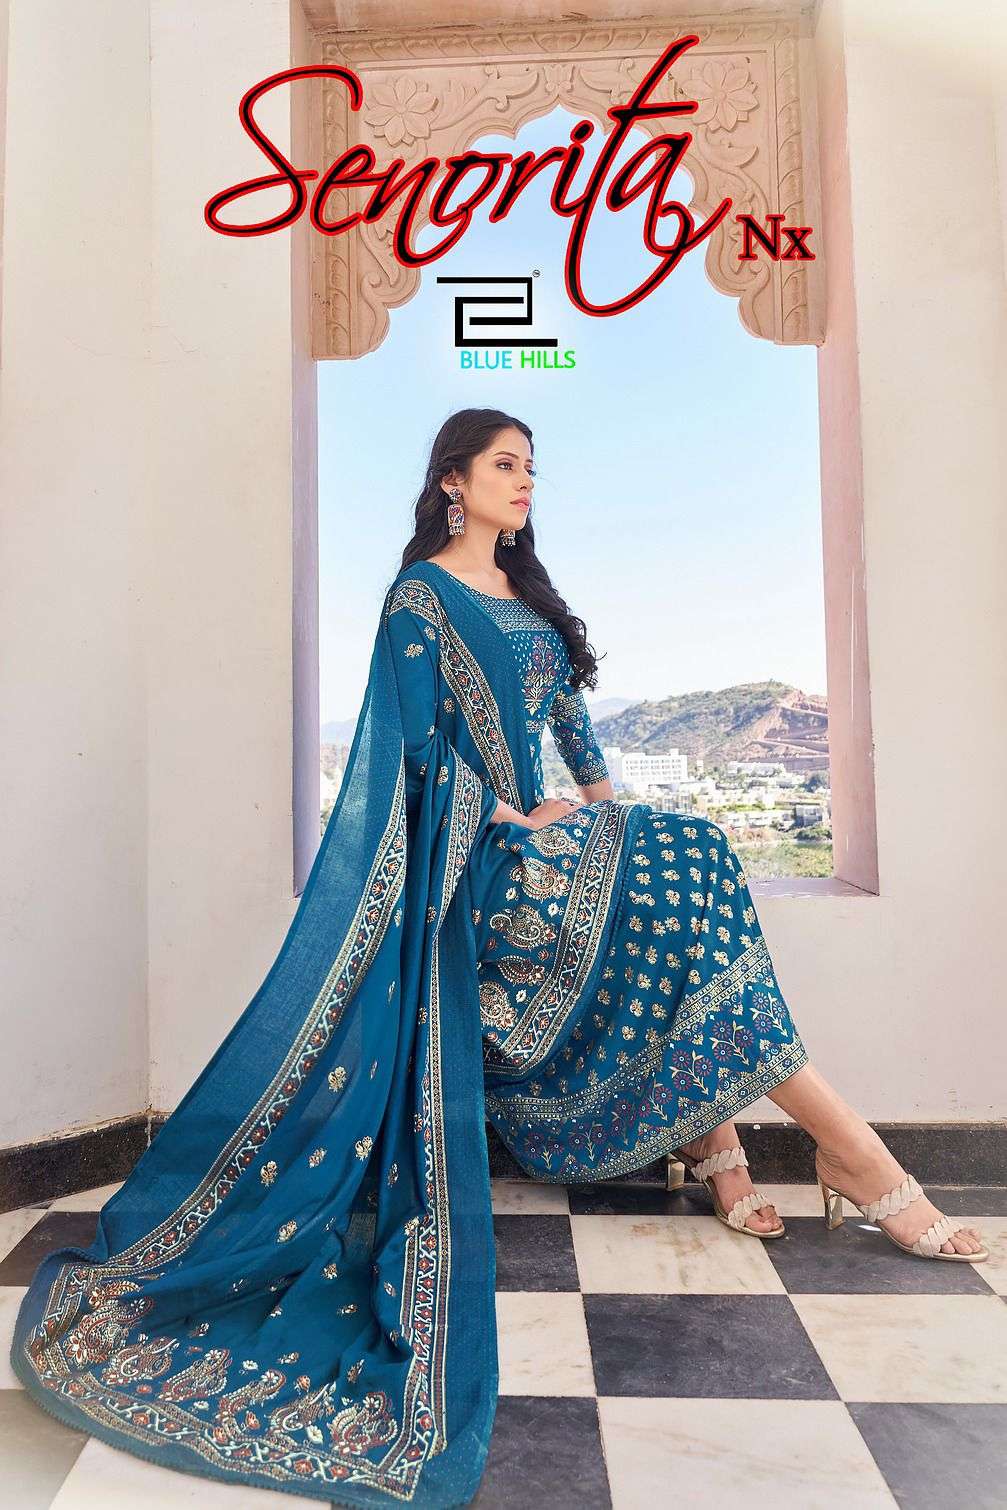 blue hills senorita vol 3 nx designer plus sizes long anarkali kurti with dupatta